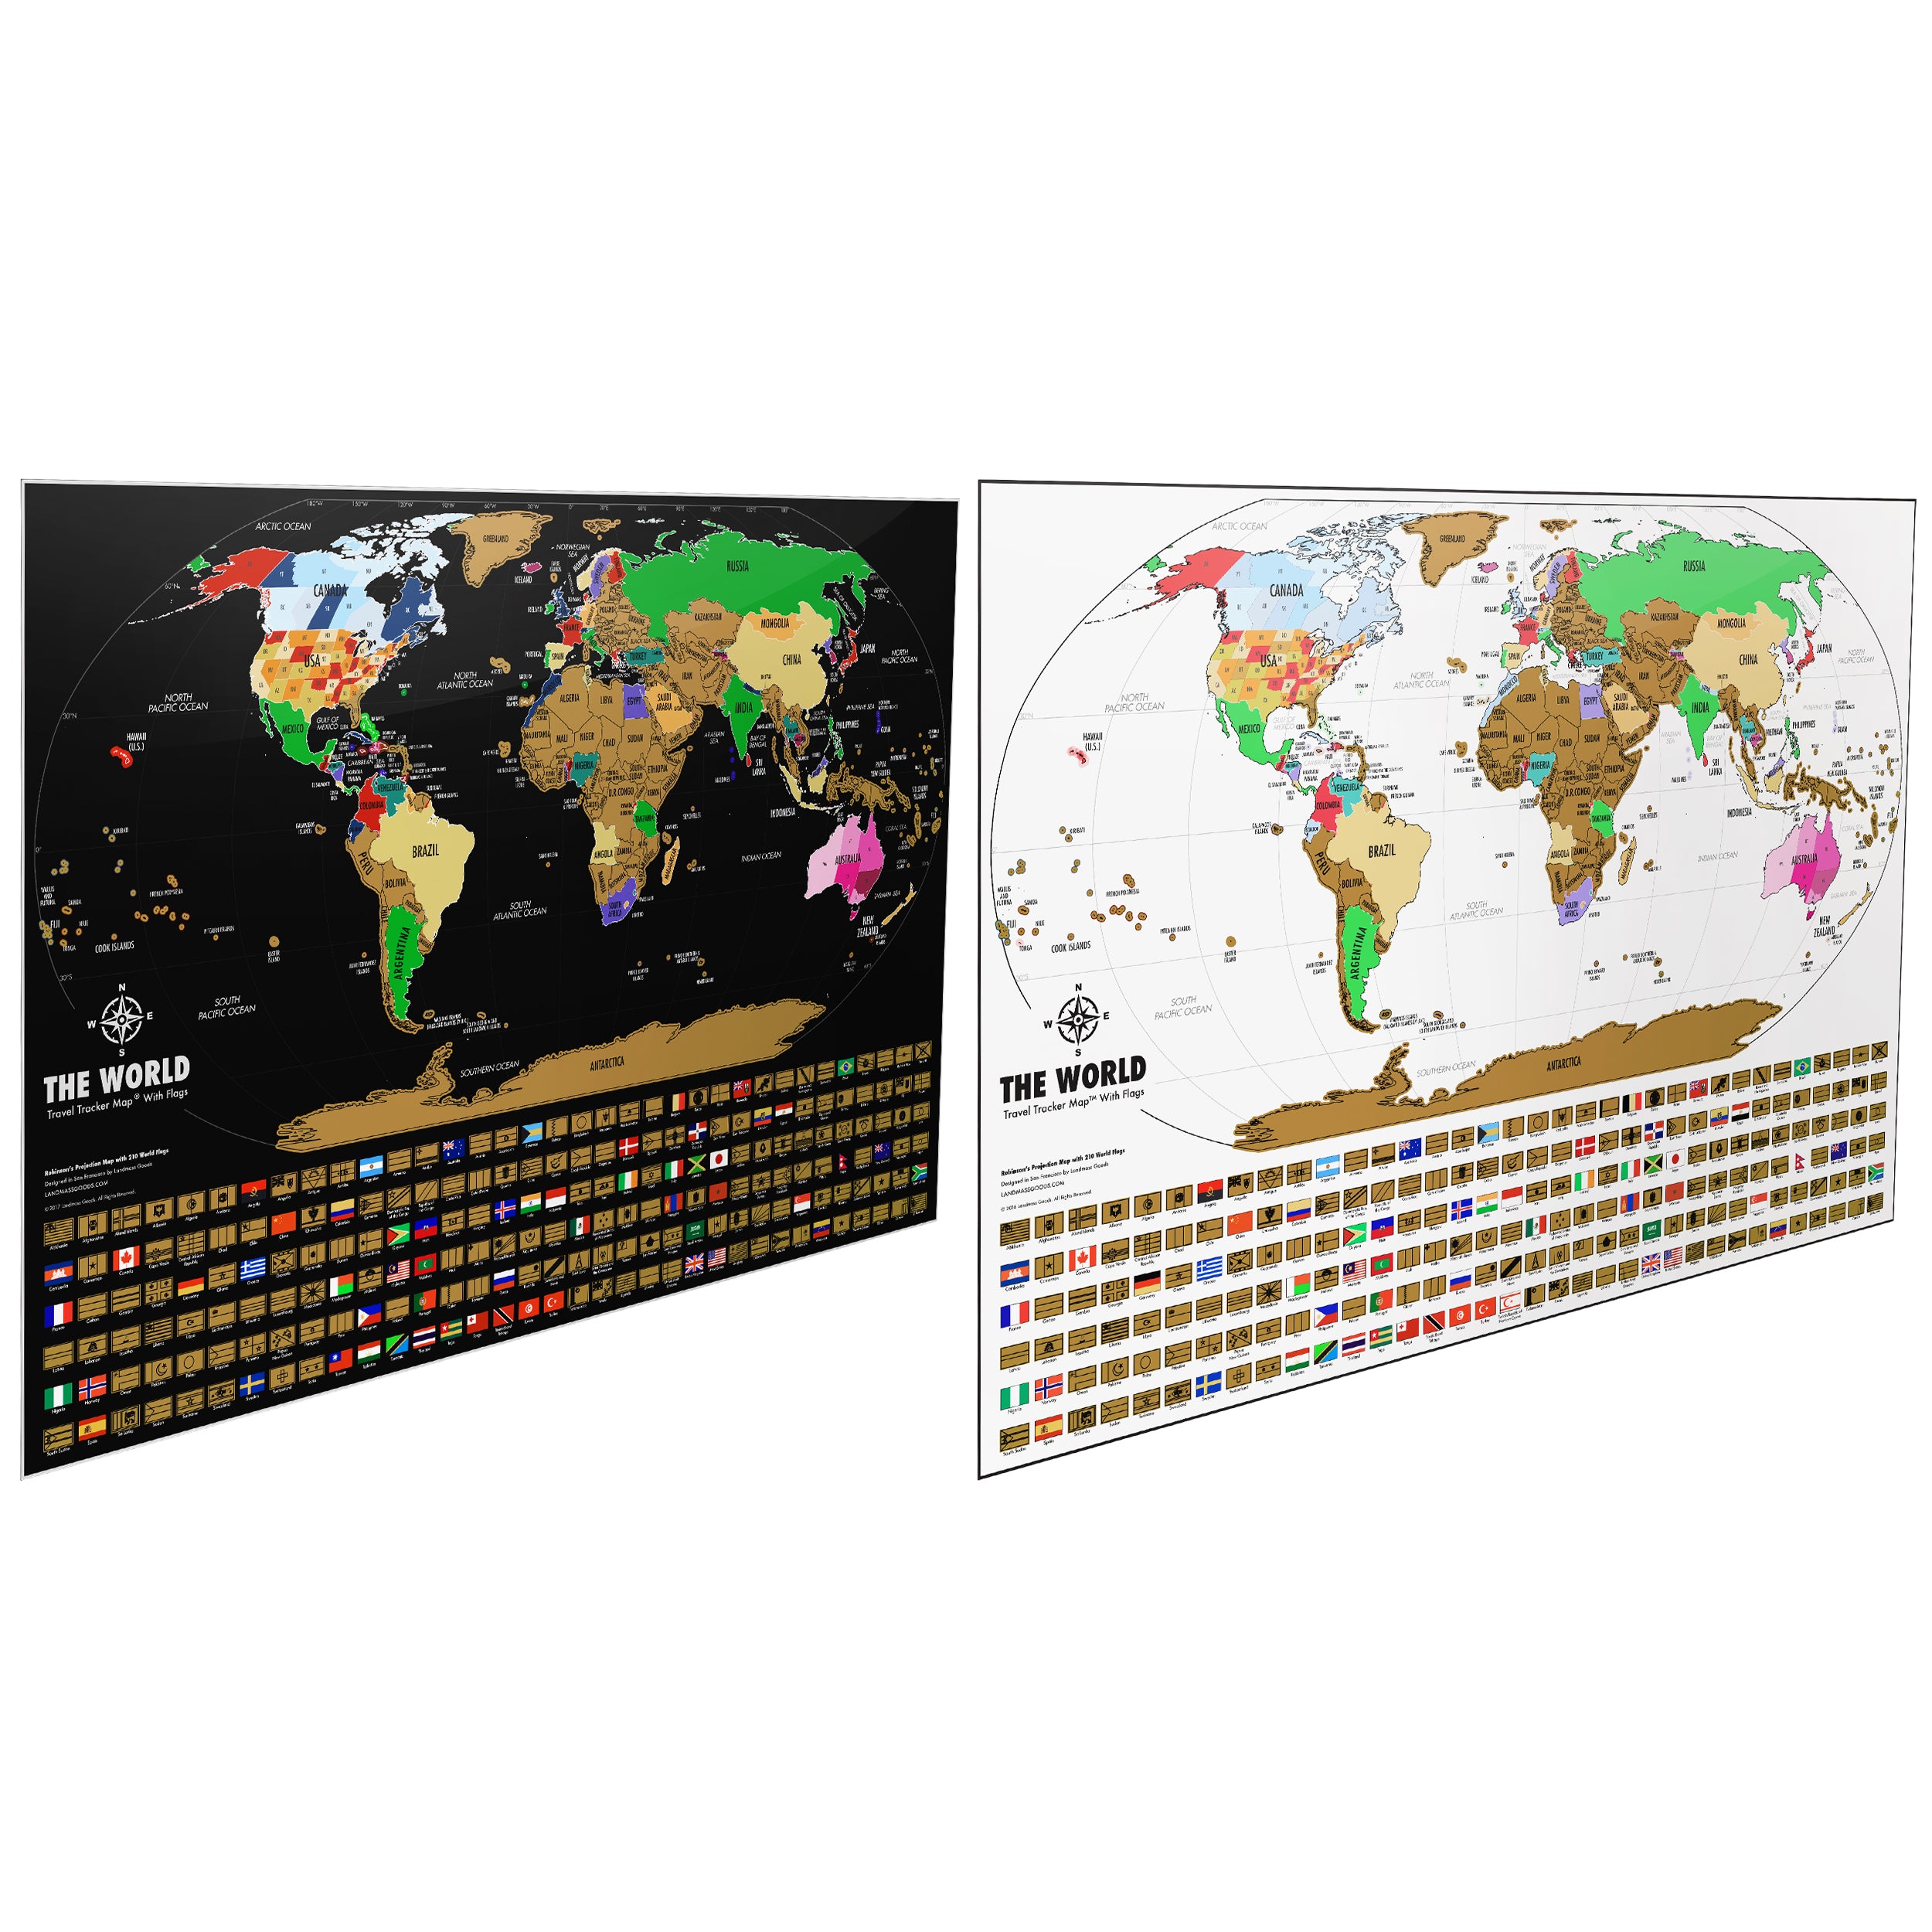 Scratch off world map – color black gold – smilemap